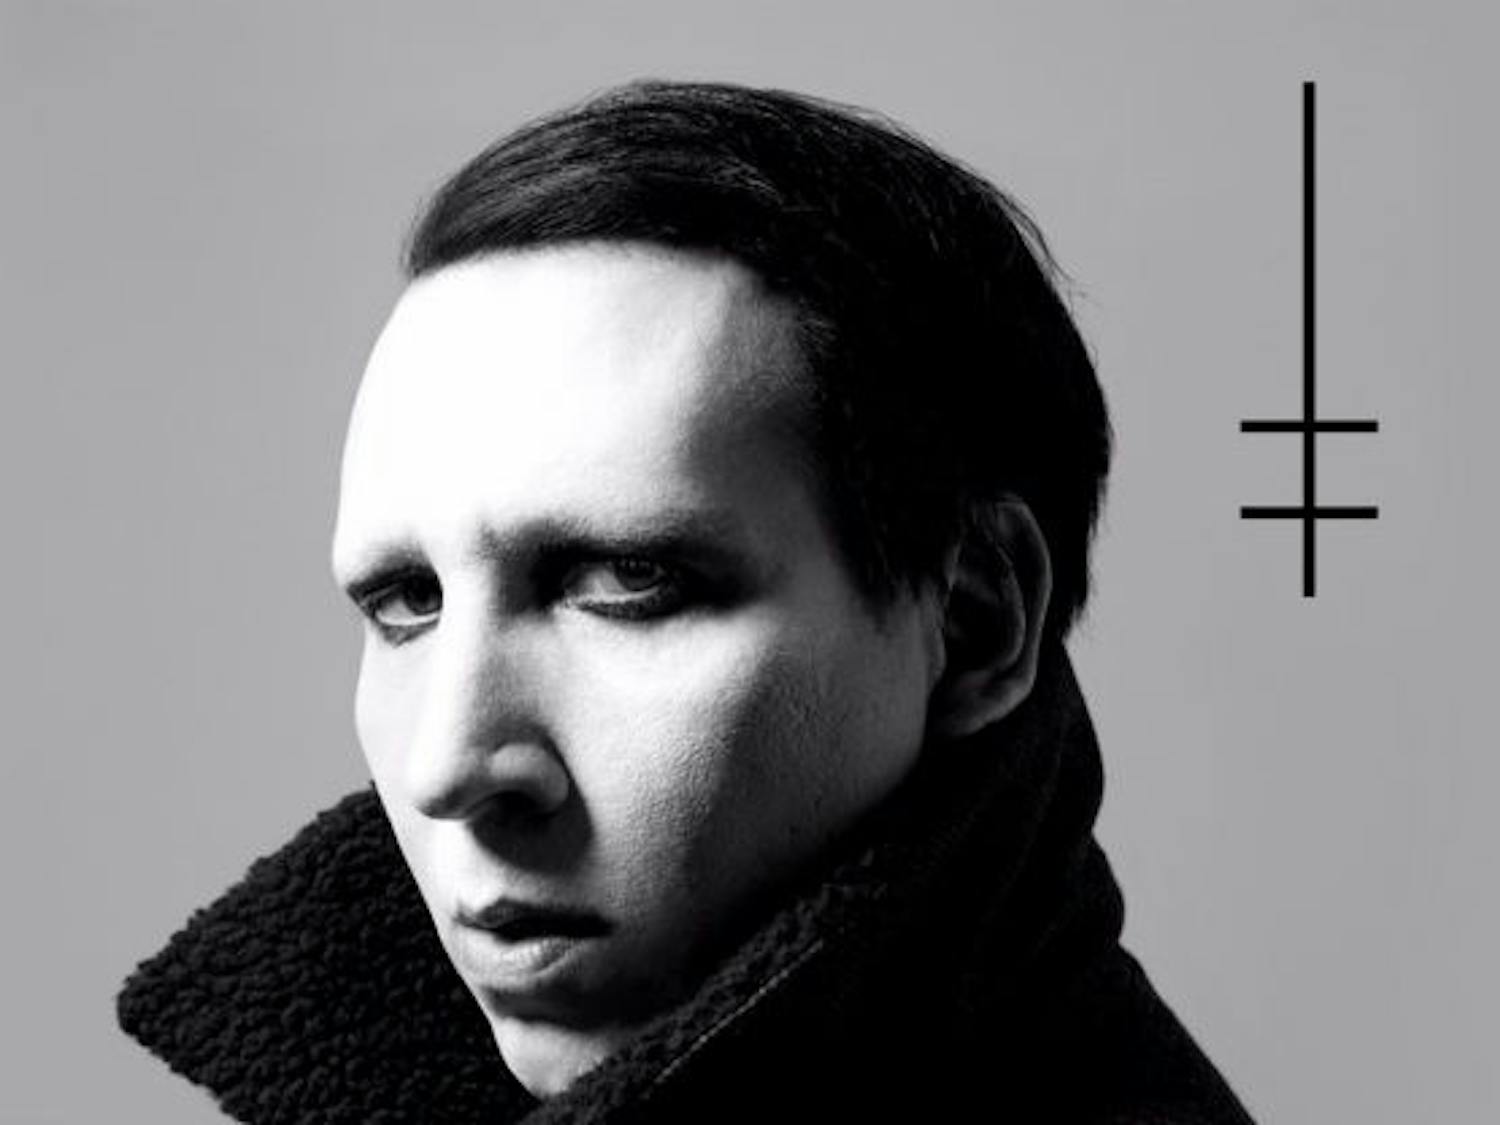 Marilyn Manson's latest album, Heaven Upside Down, was released last Friday, Oct. 6.